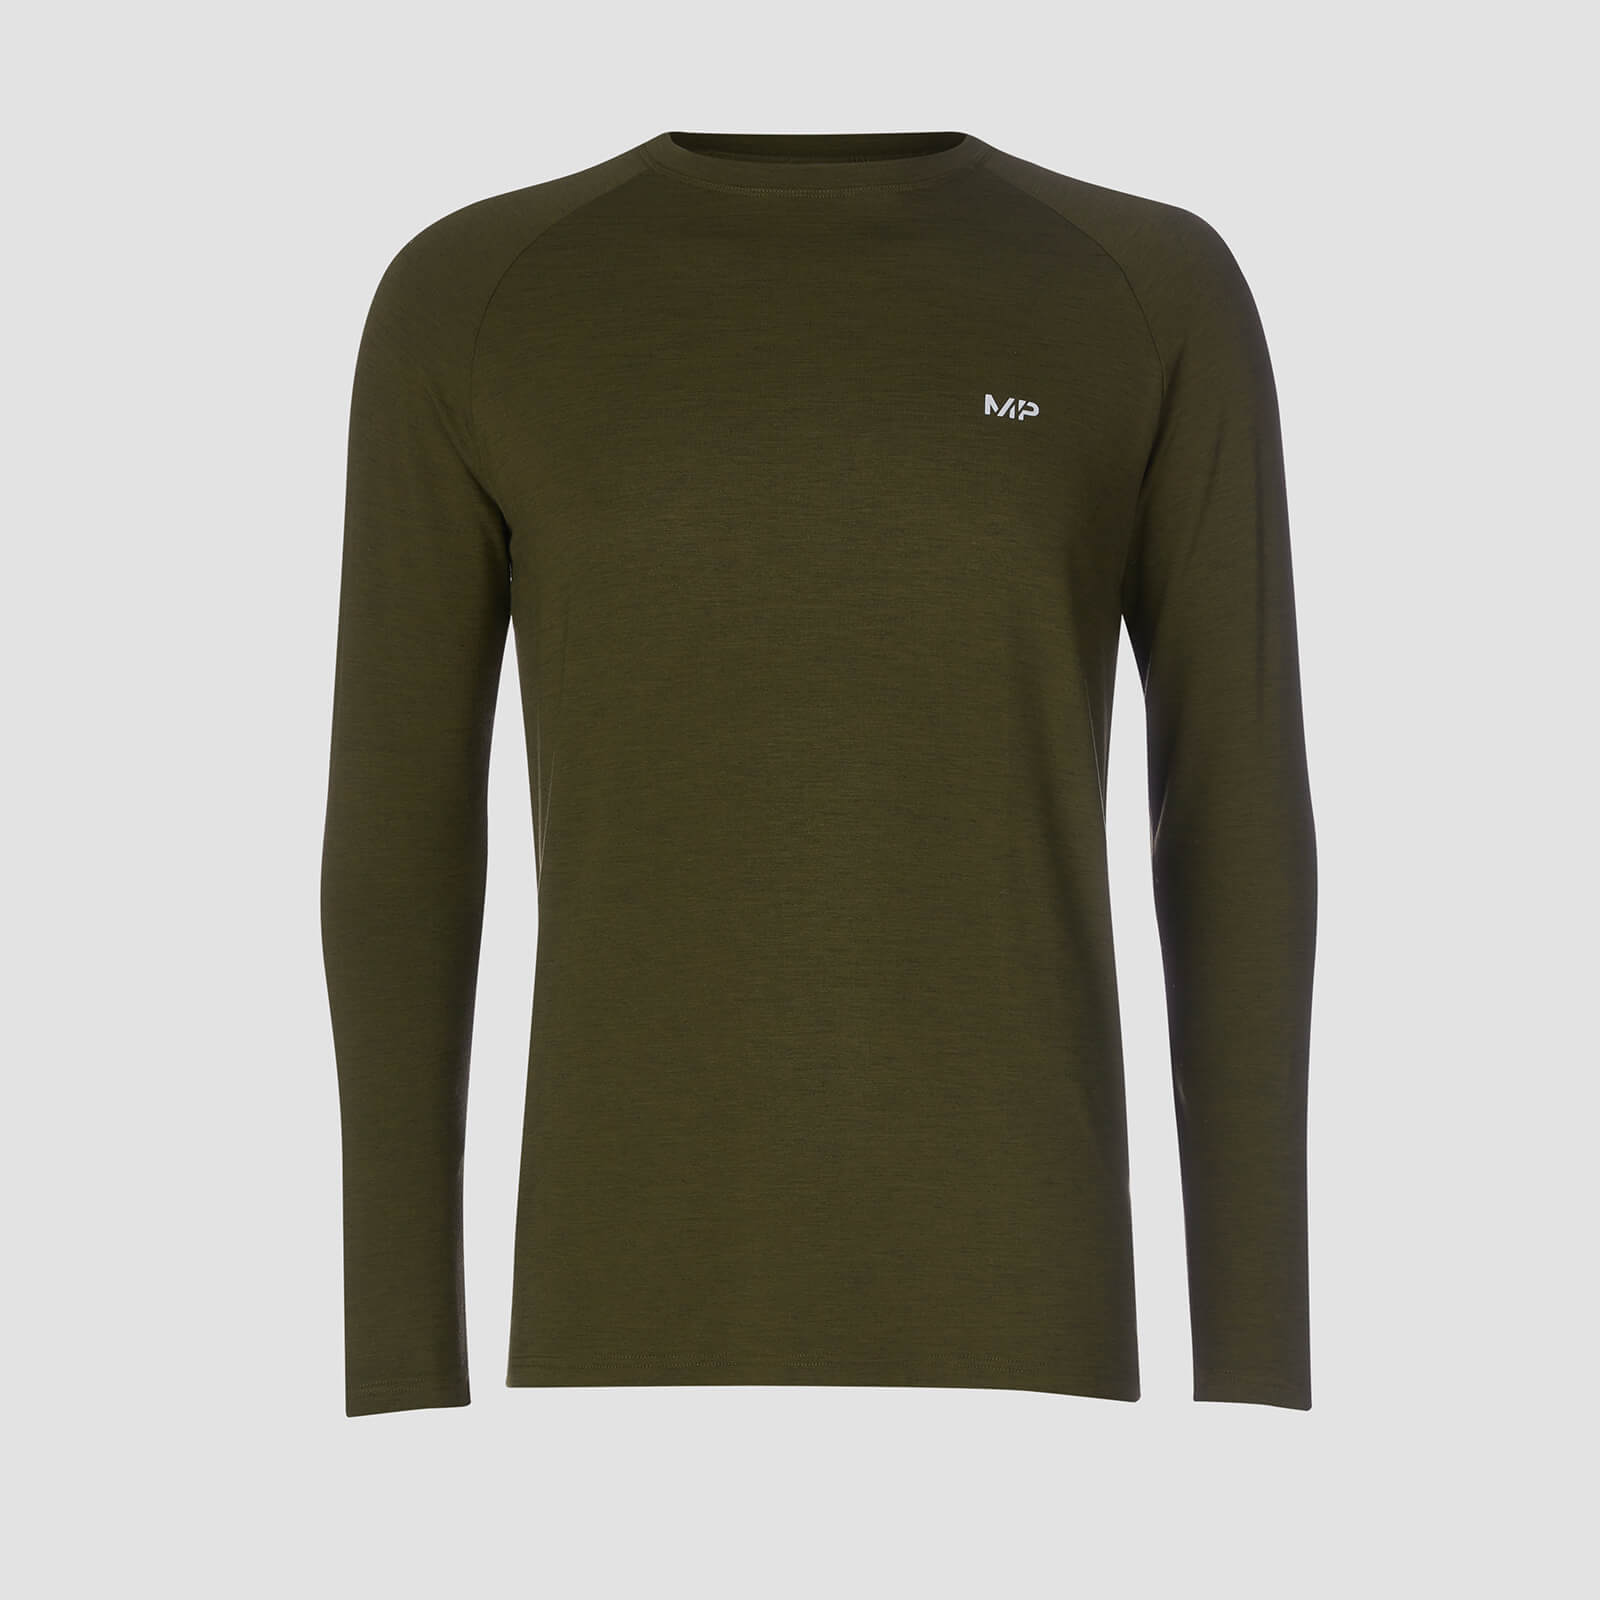 Myprotein MP Performance Long Sleeve T-Shirt - Army Green/Sort - XL